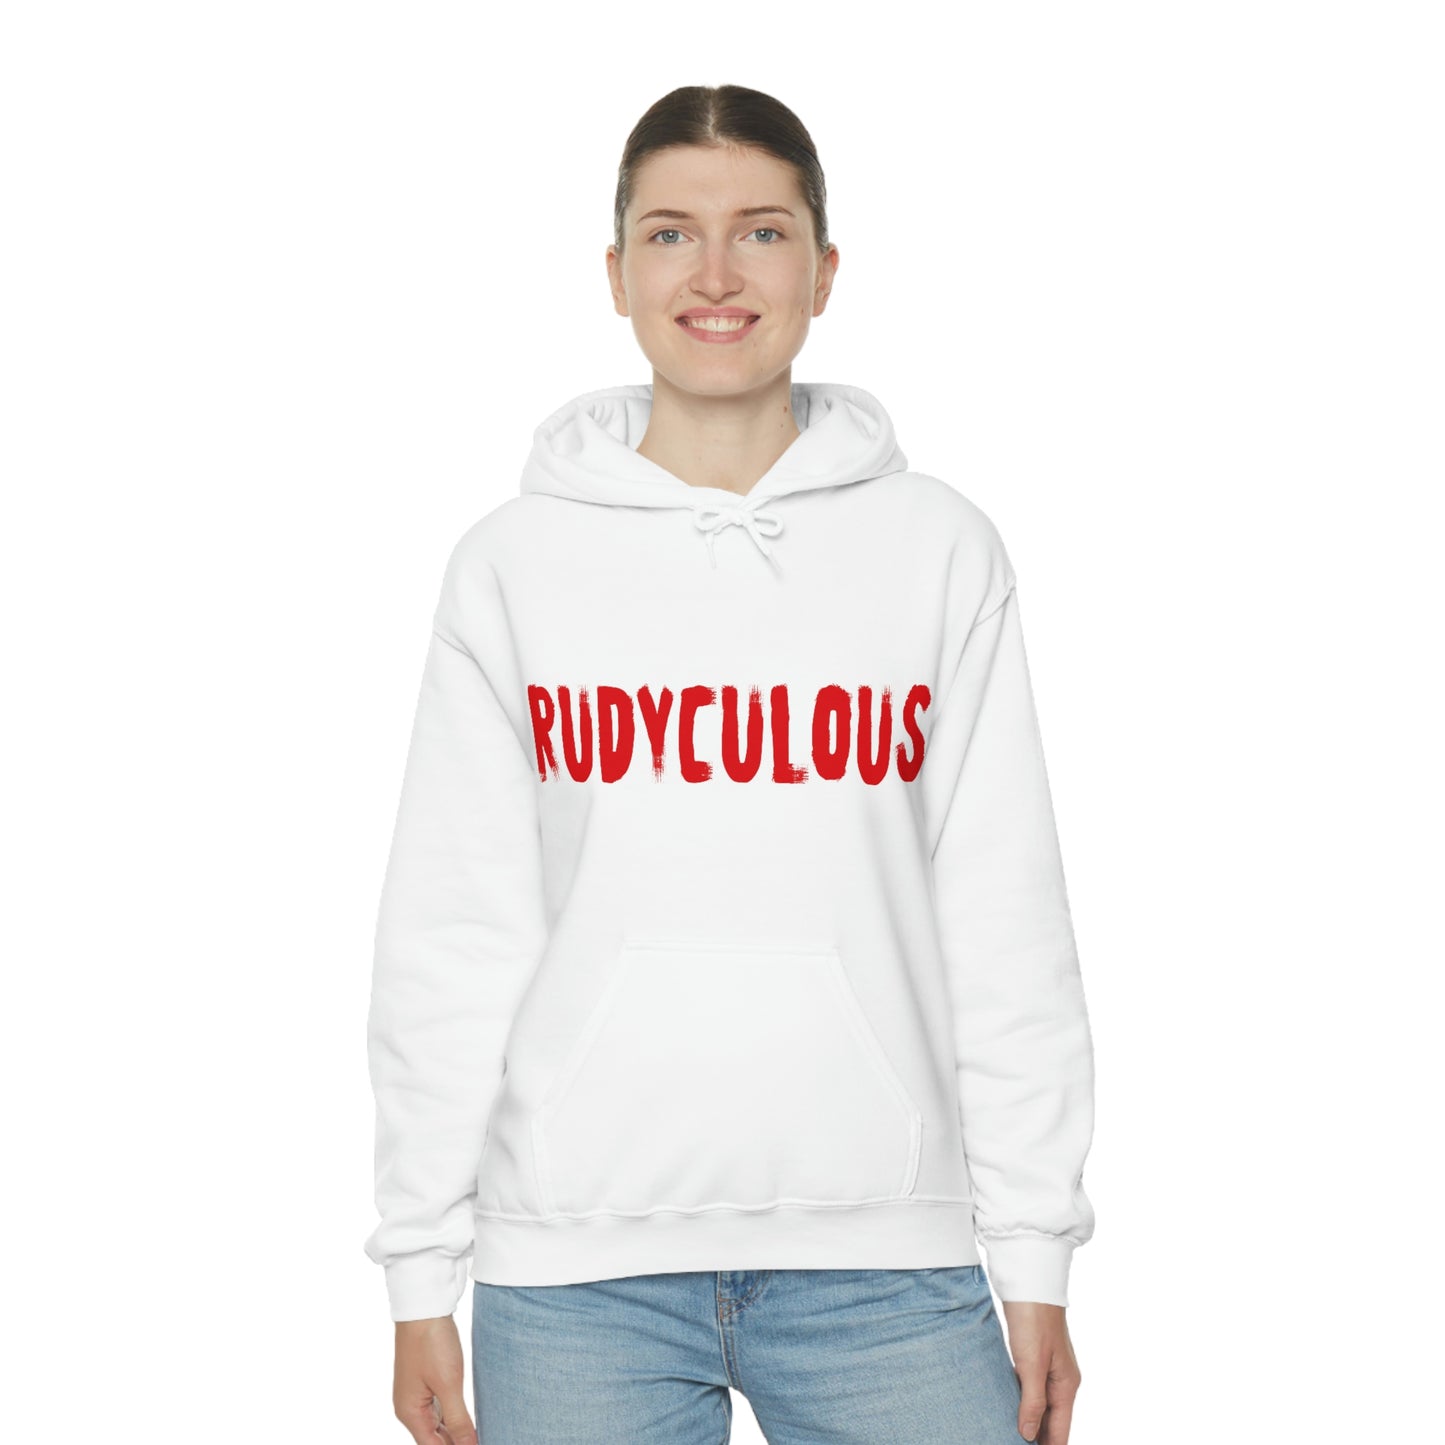 Unisex "Rudyculuos" Hooded Sweatshirt